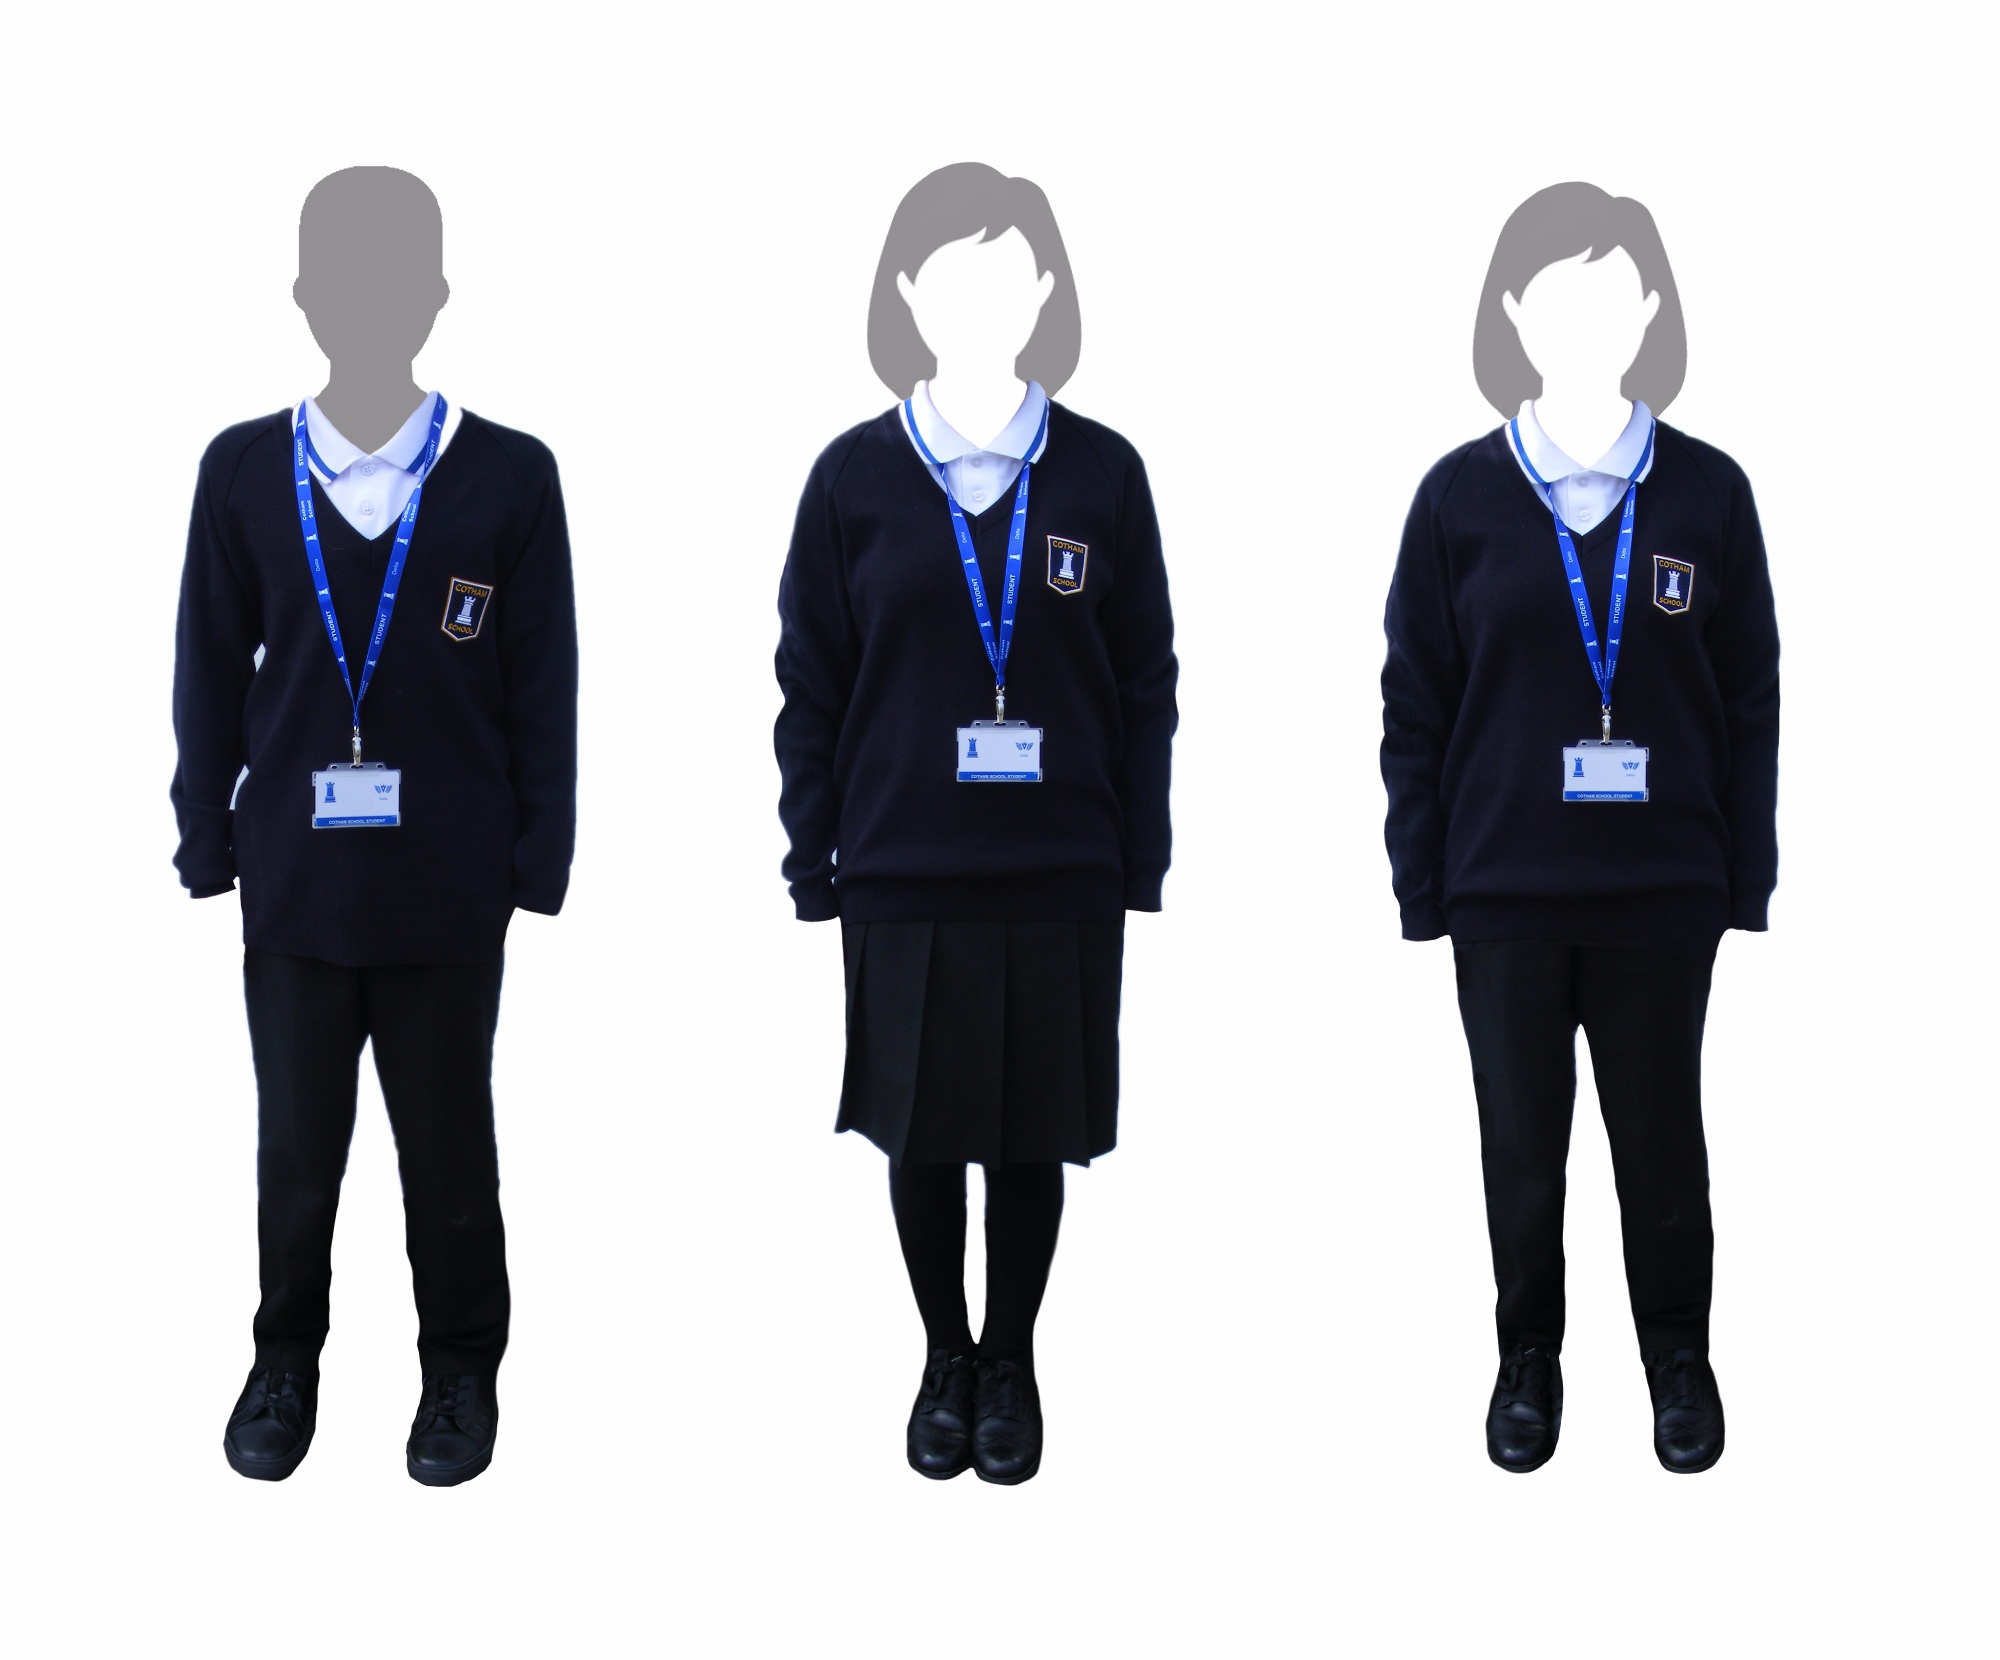 Should student wear school uniform